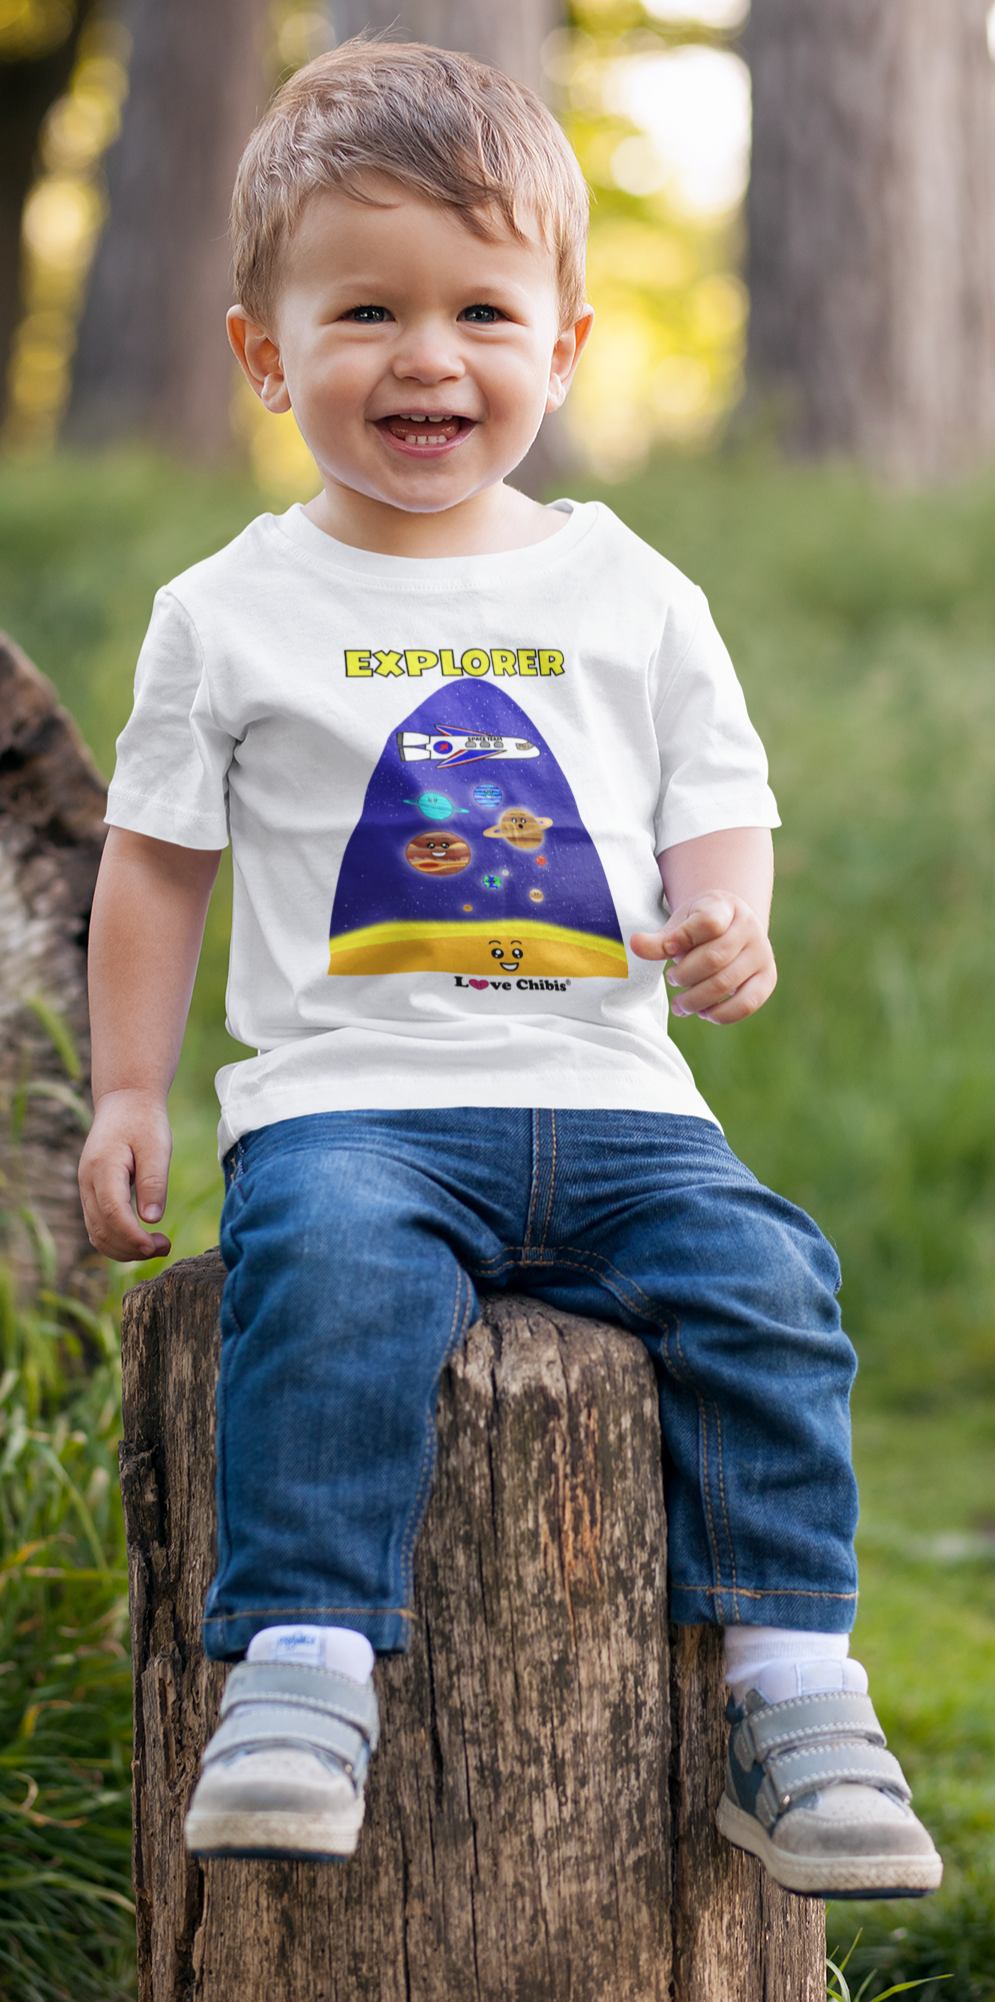 Toddler with Love Chibis Explorer tshirt